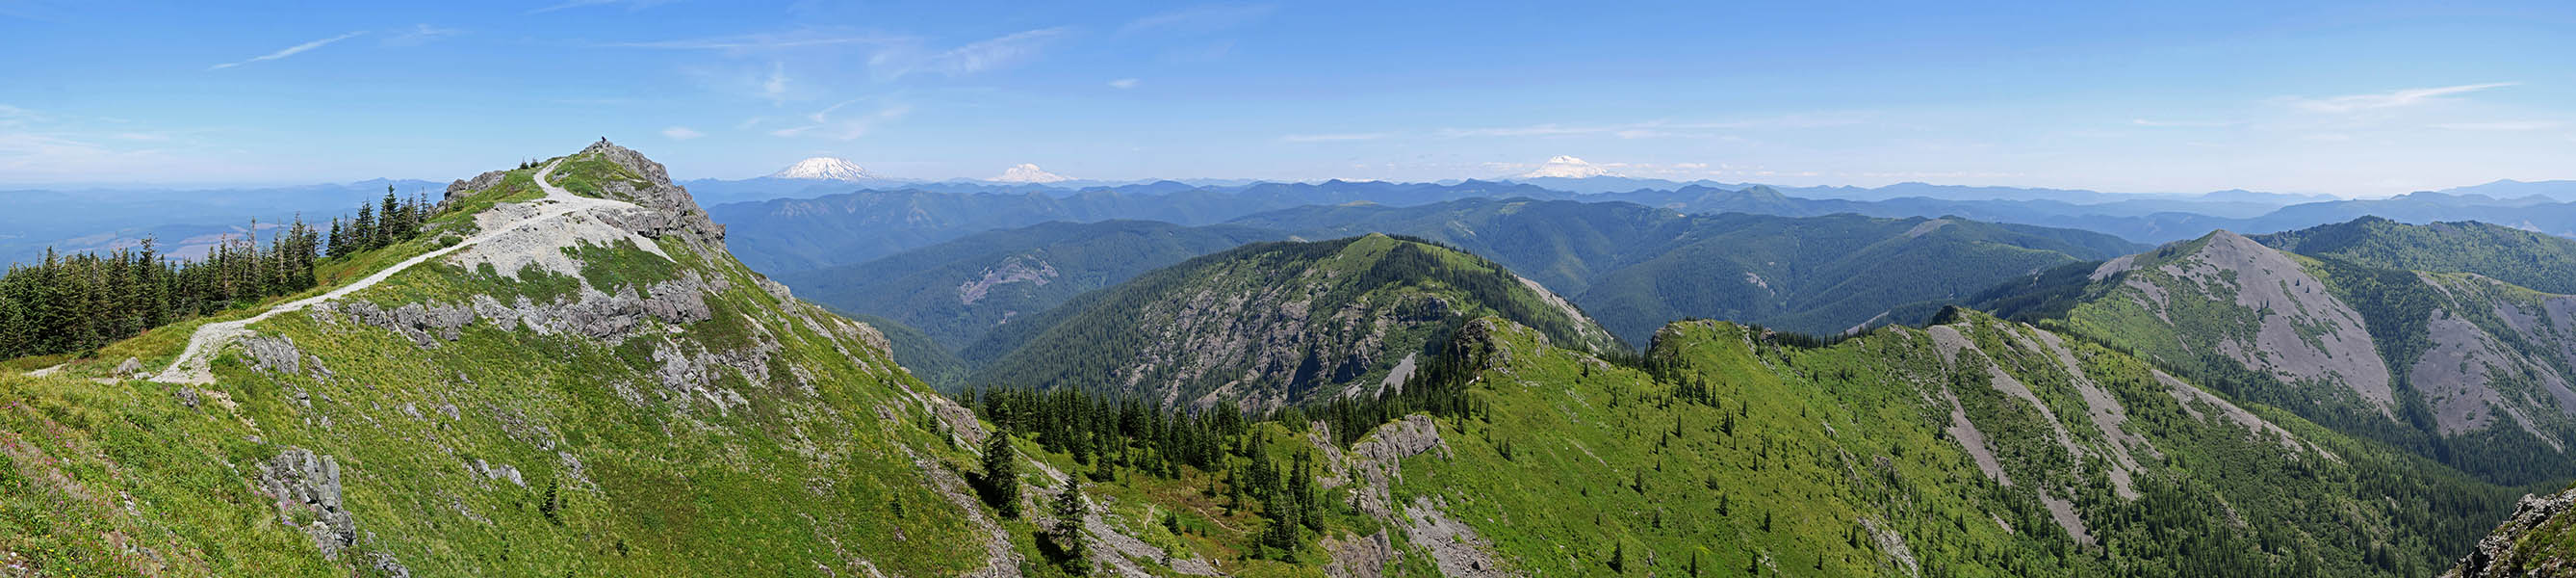 Silver Star Mountain panorama [Silver Star Mountain, Gifford Pinchot National Forest, Skamania County, Washington]